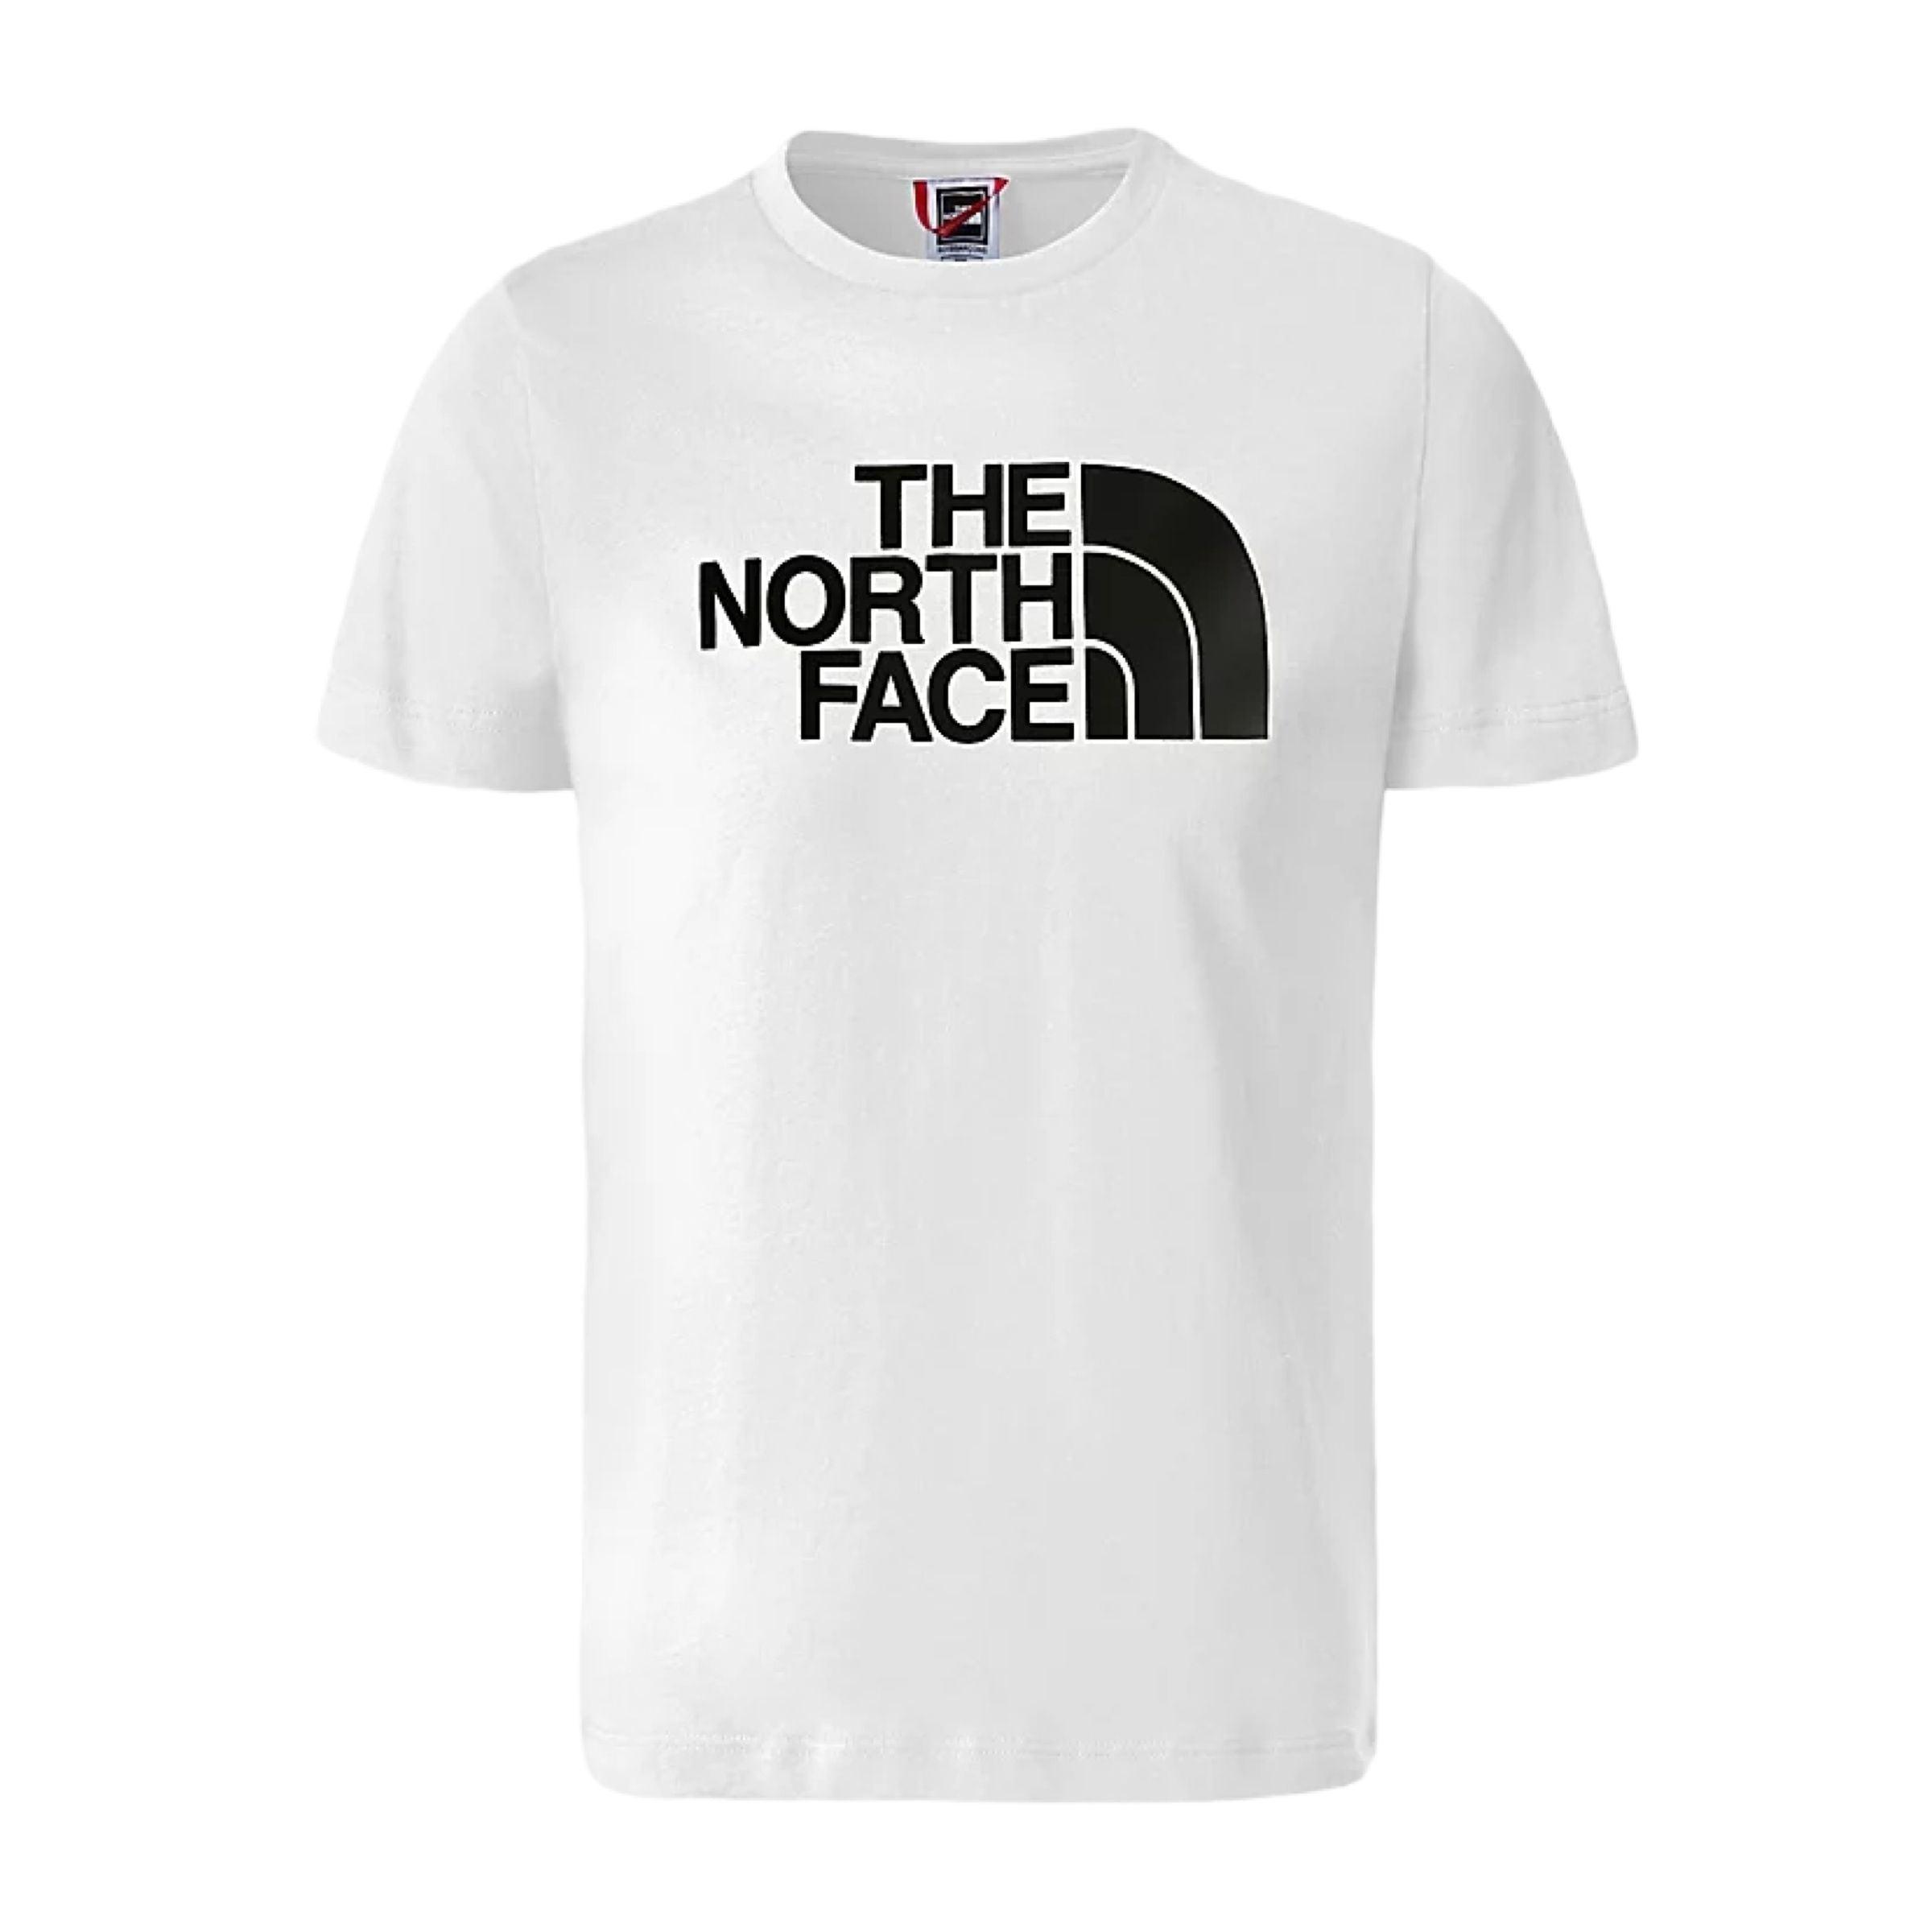 The North Face | T-shirt Easy Bambino White/Black - Fabbrica Ski Sises